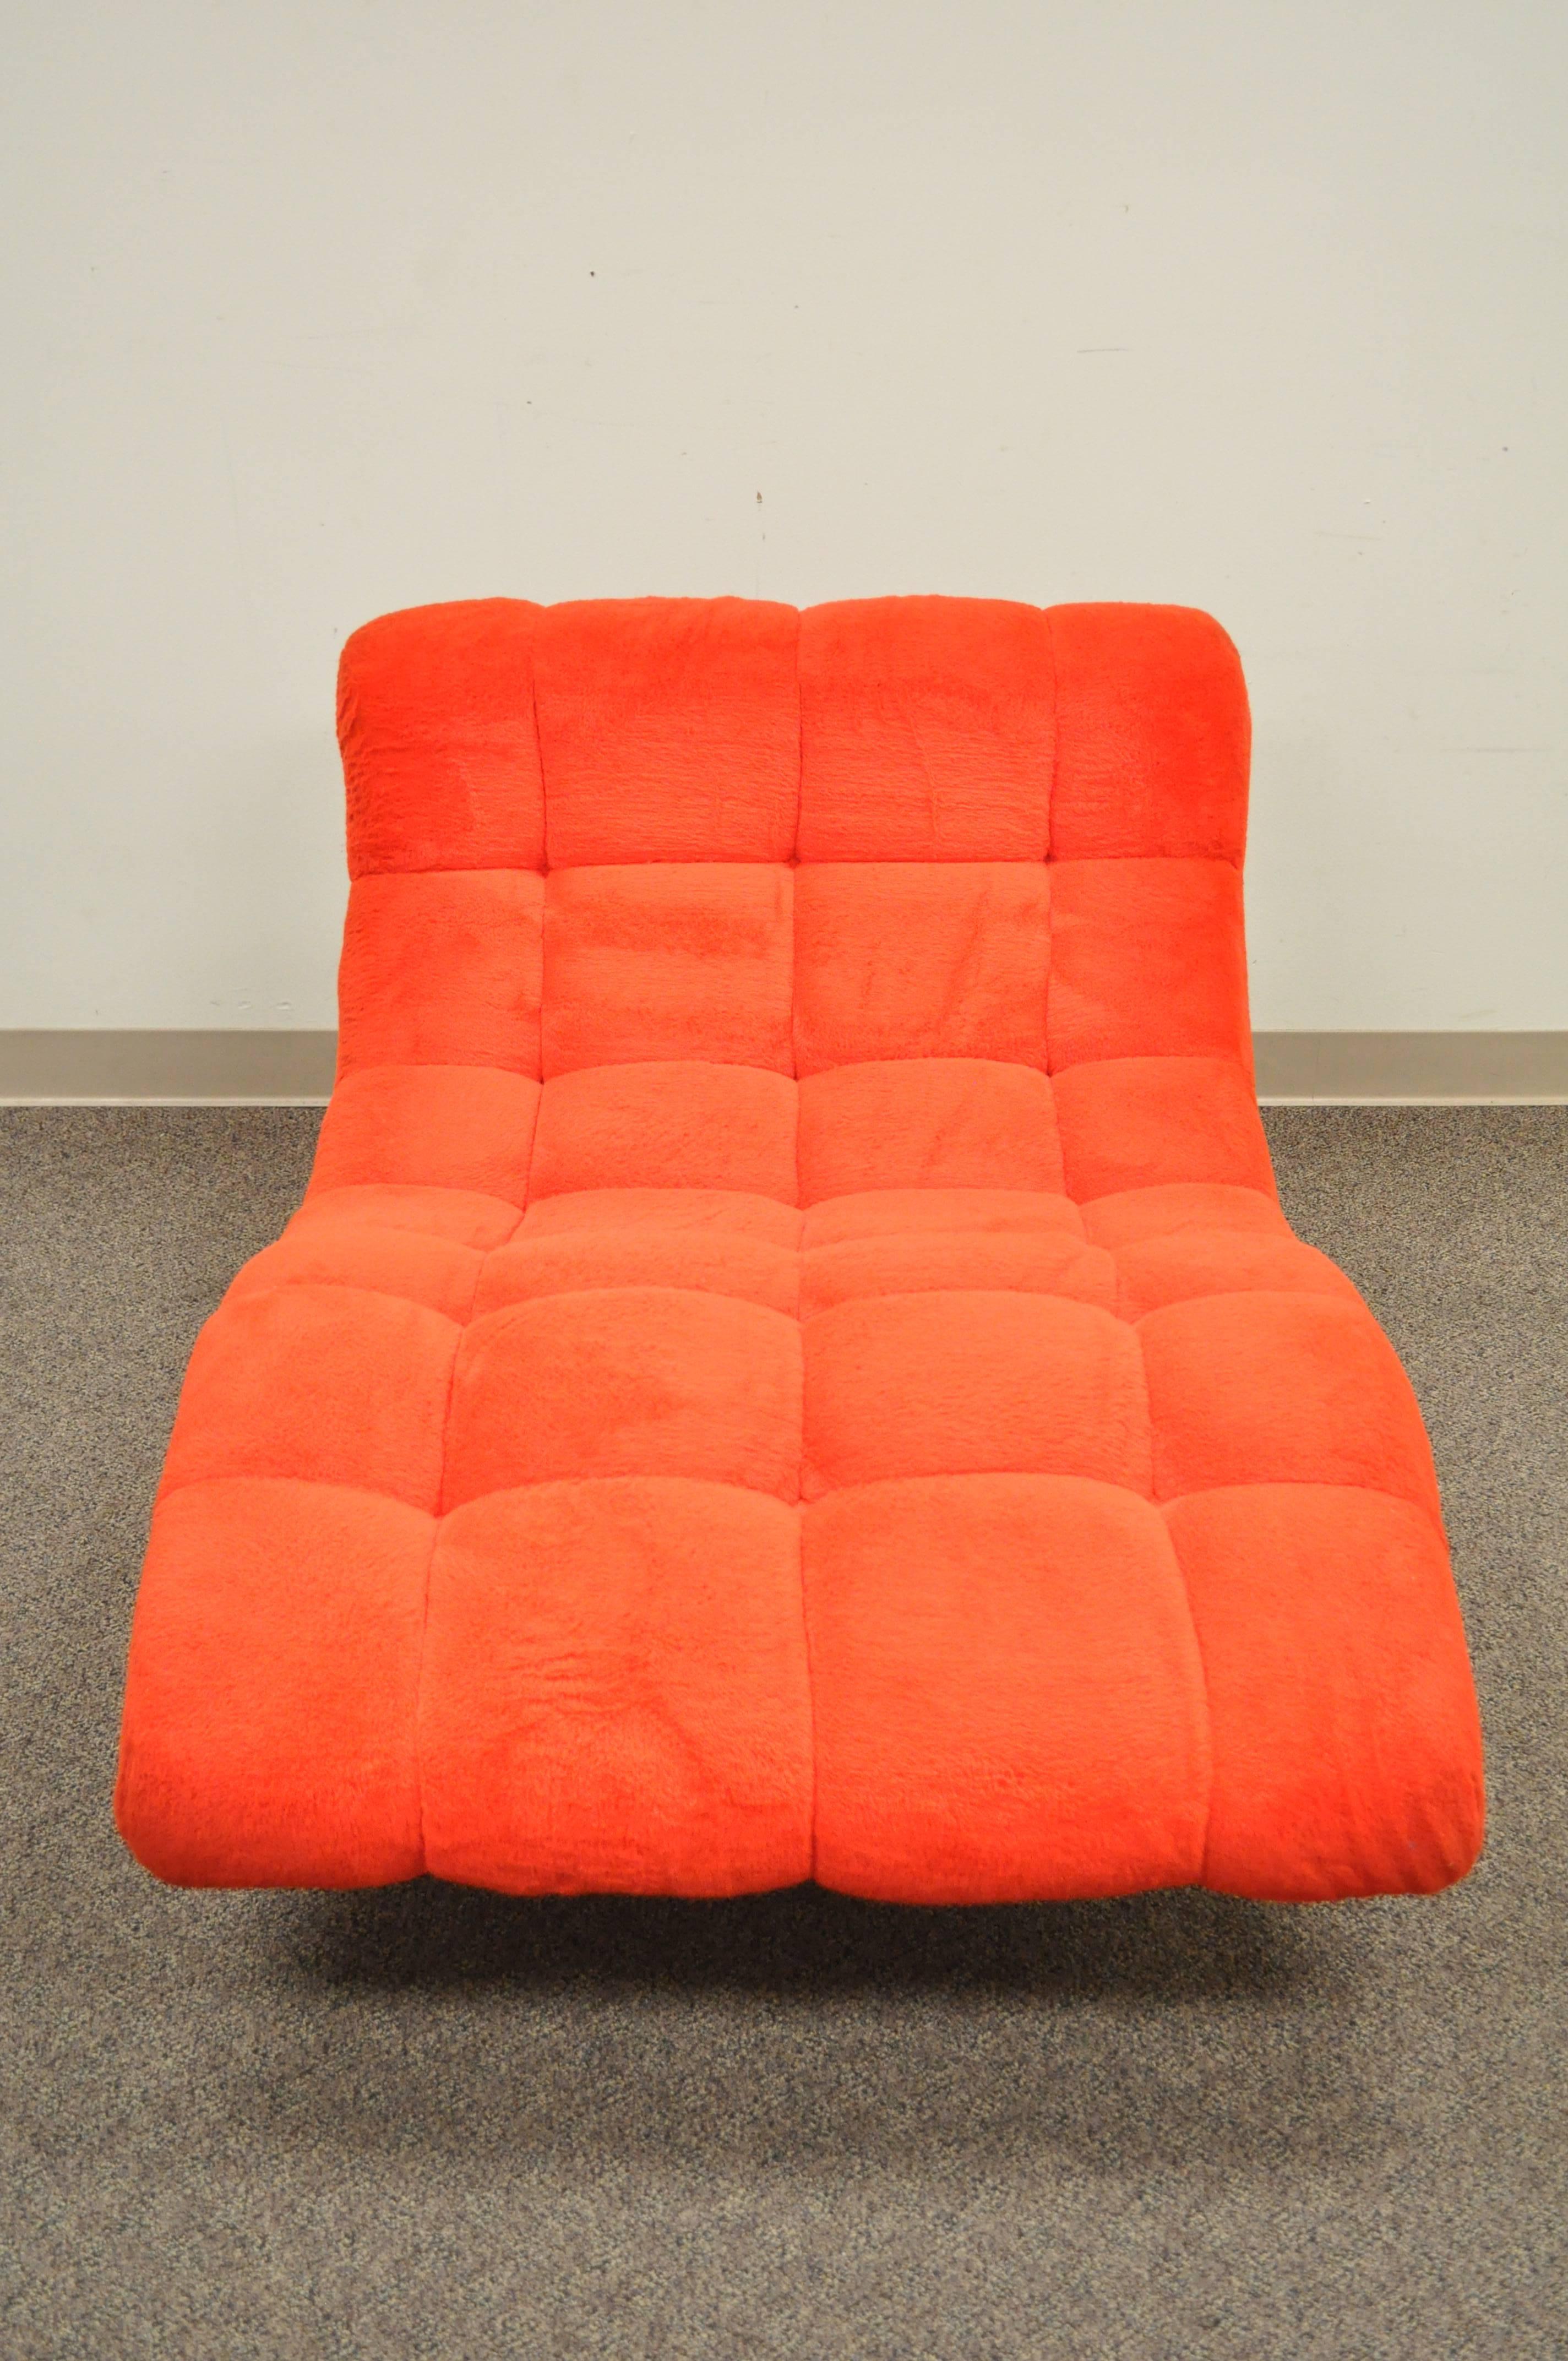 orange chaise lounge